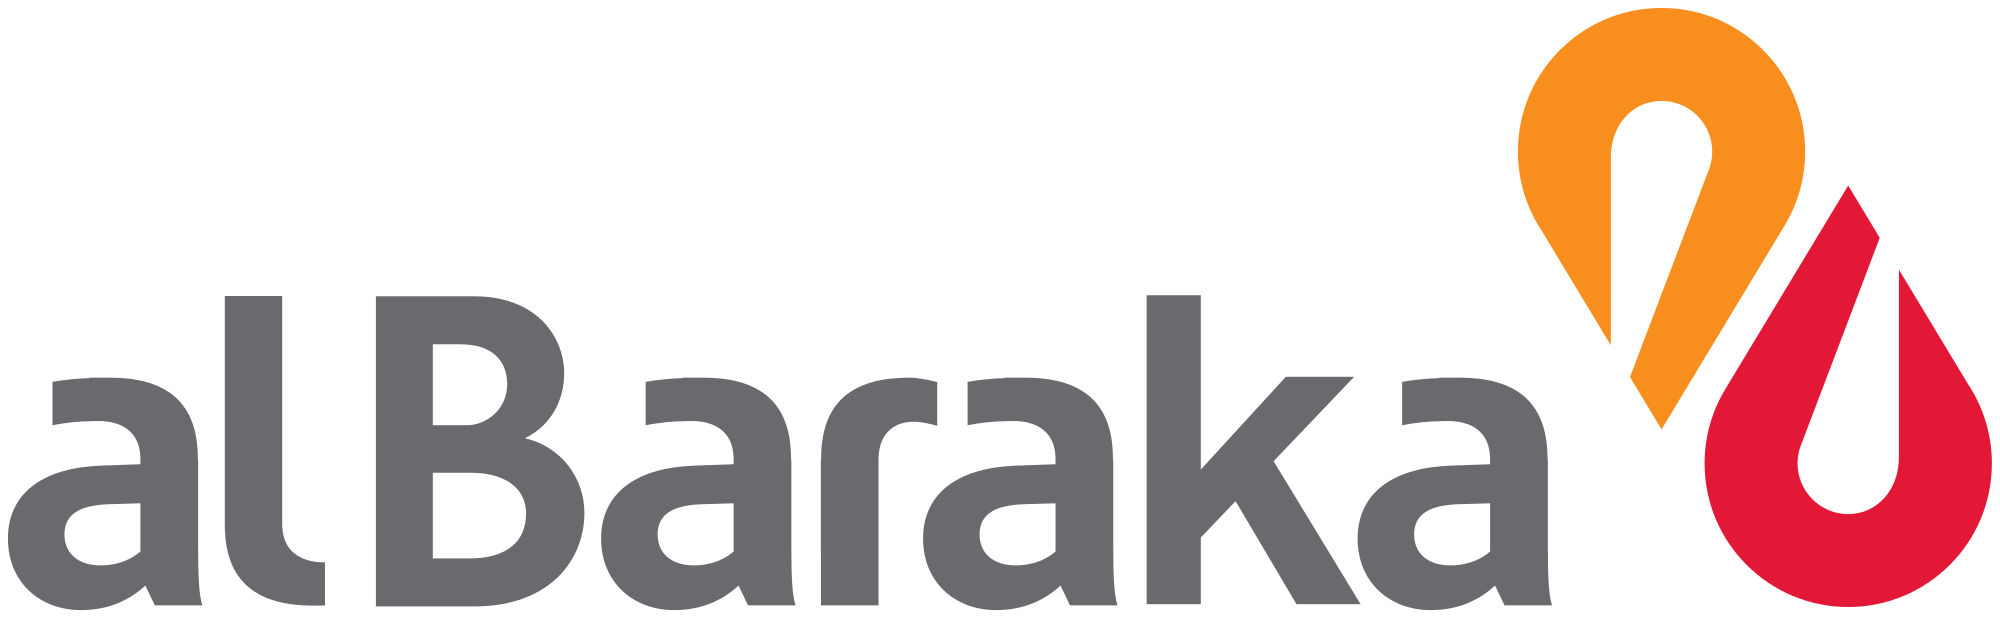 Banking Group Logo - Al Baraka Banking Group Logo.svg